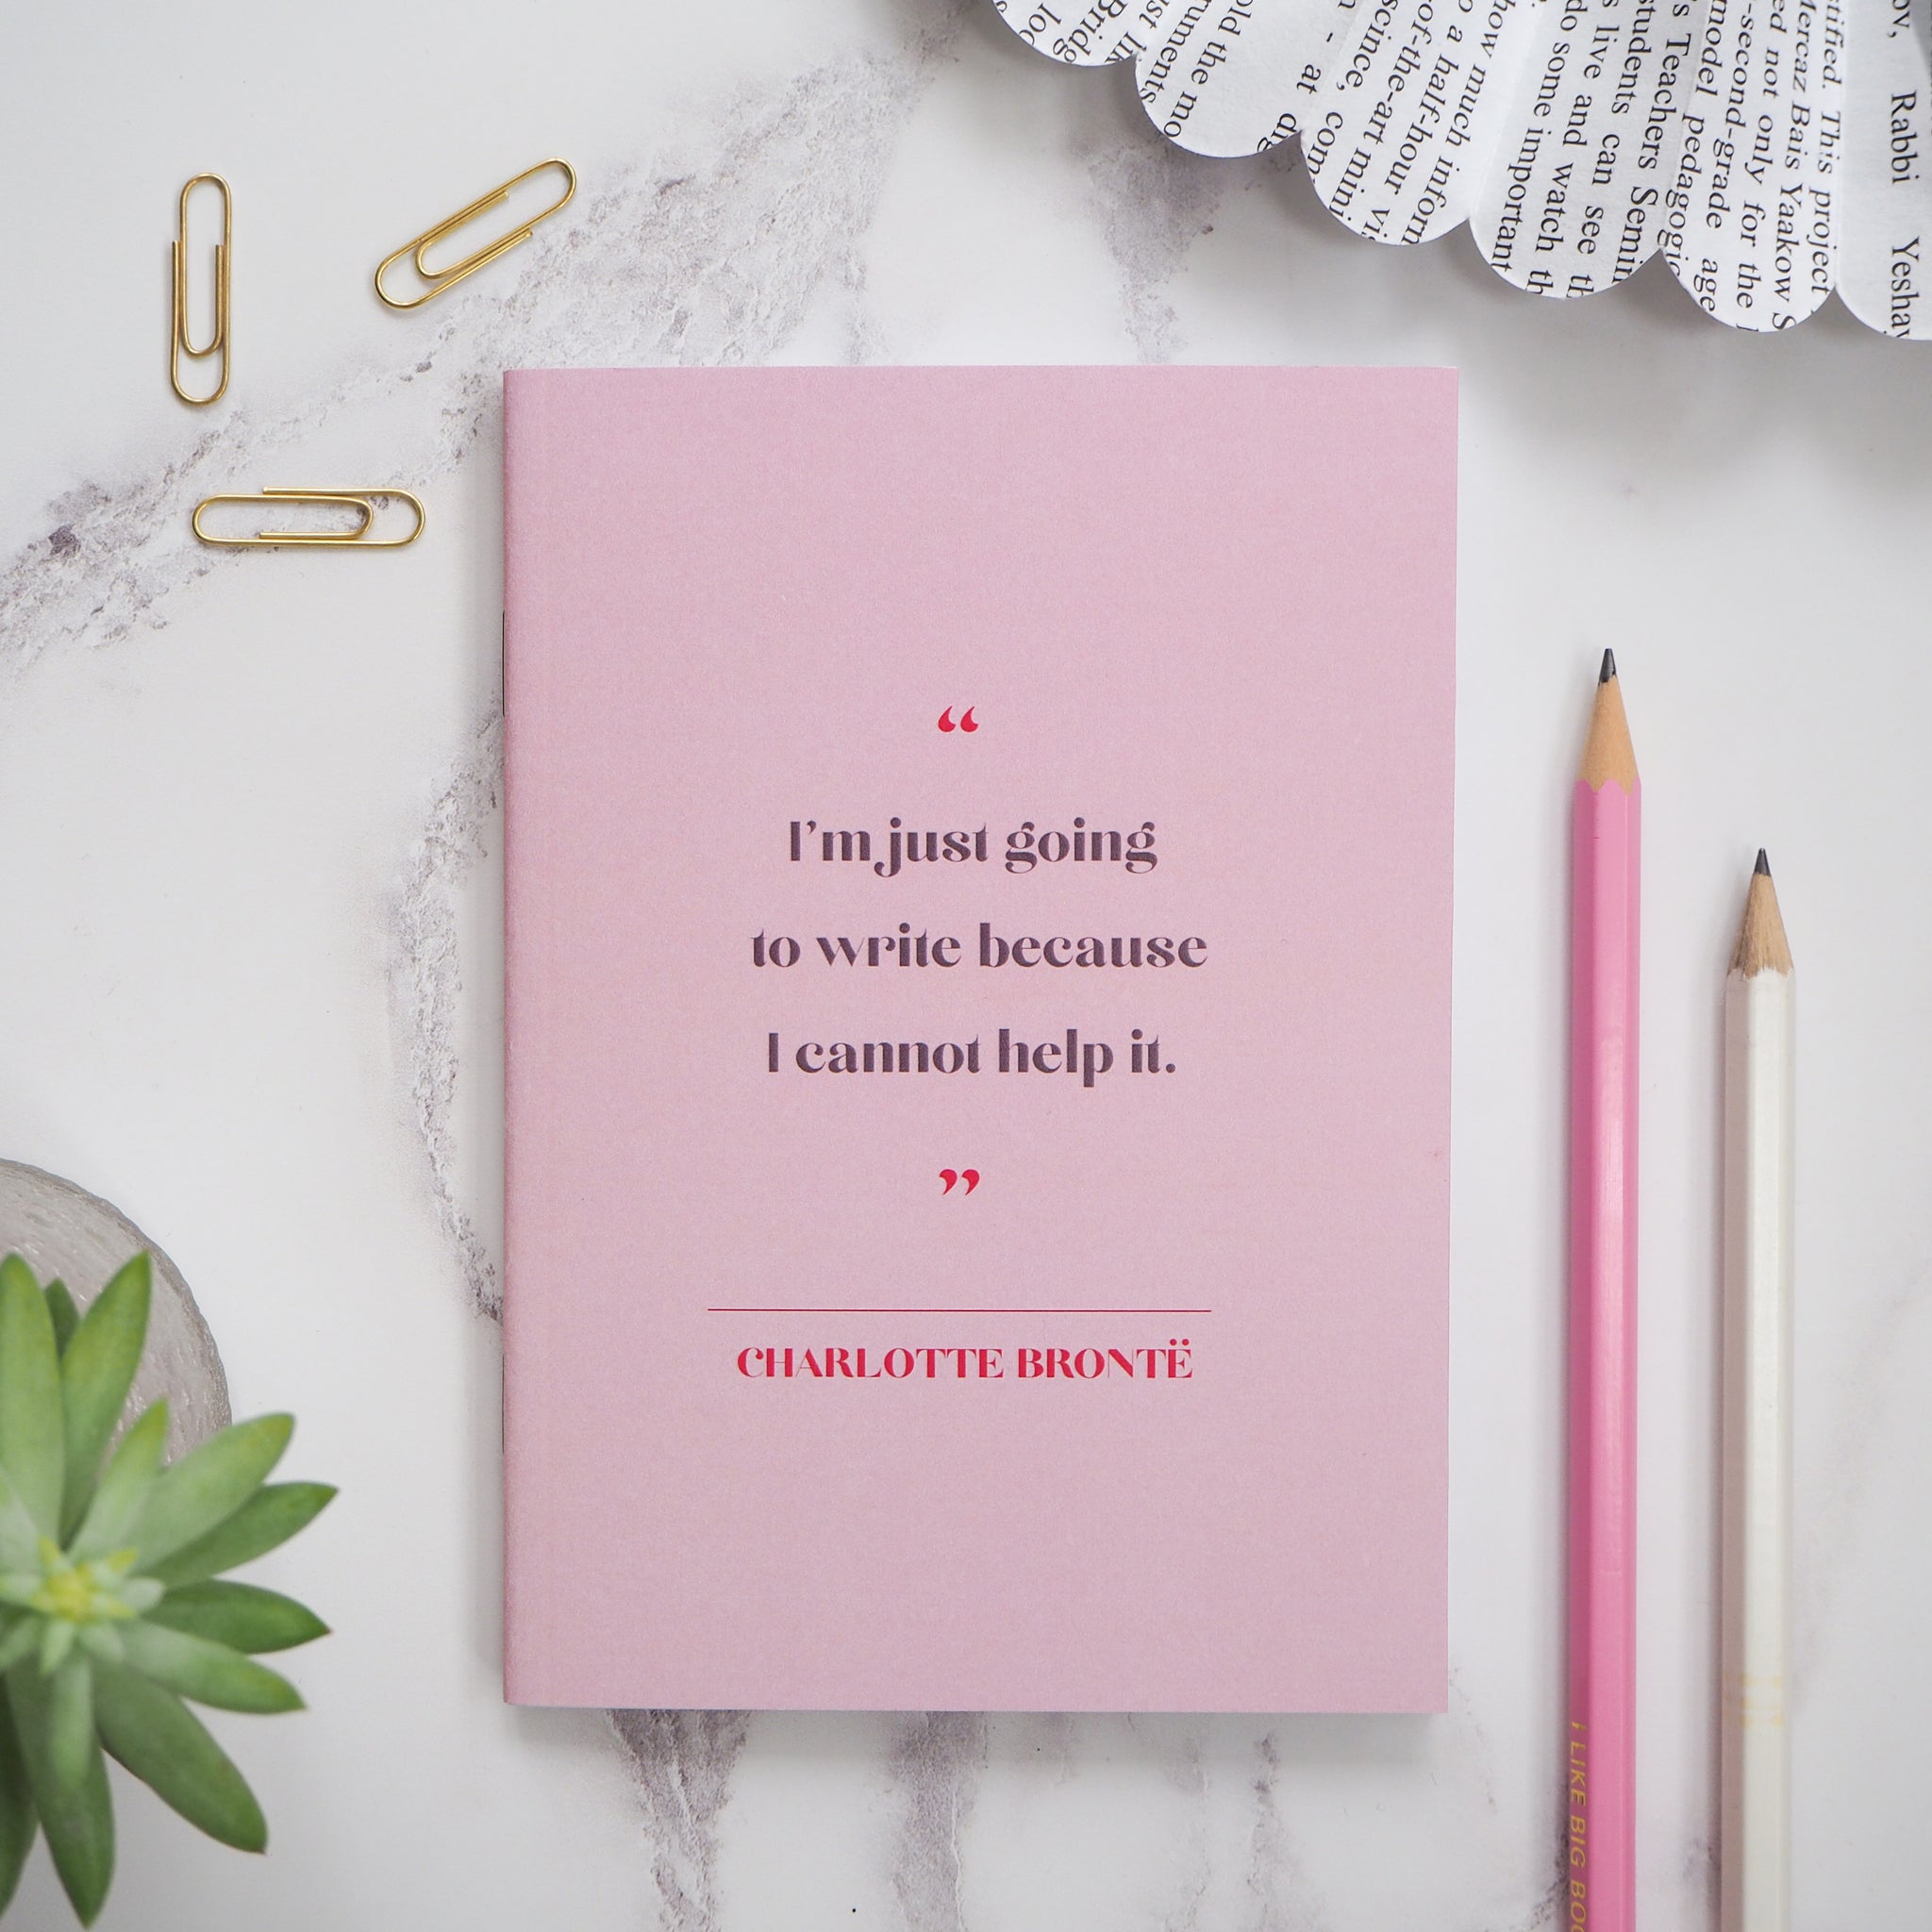 Charlotte Brontë - Women Writers Pocket Notebook